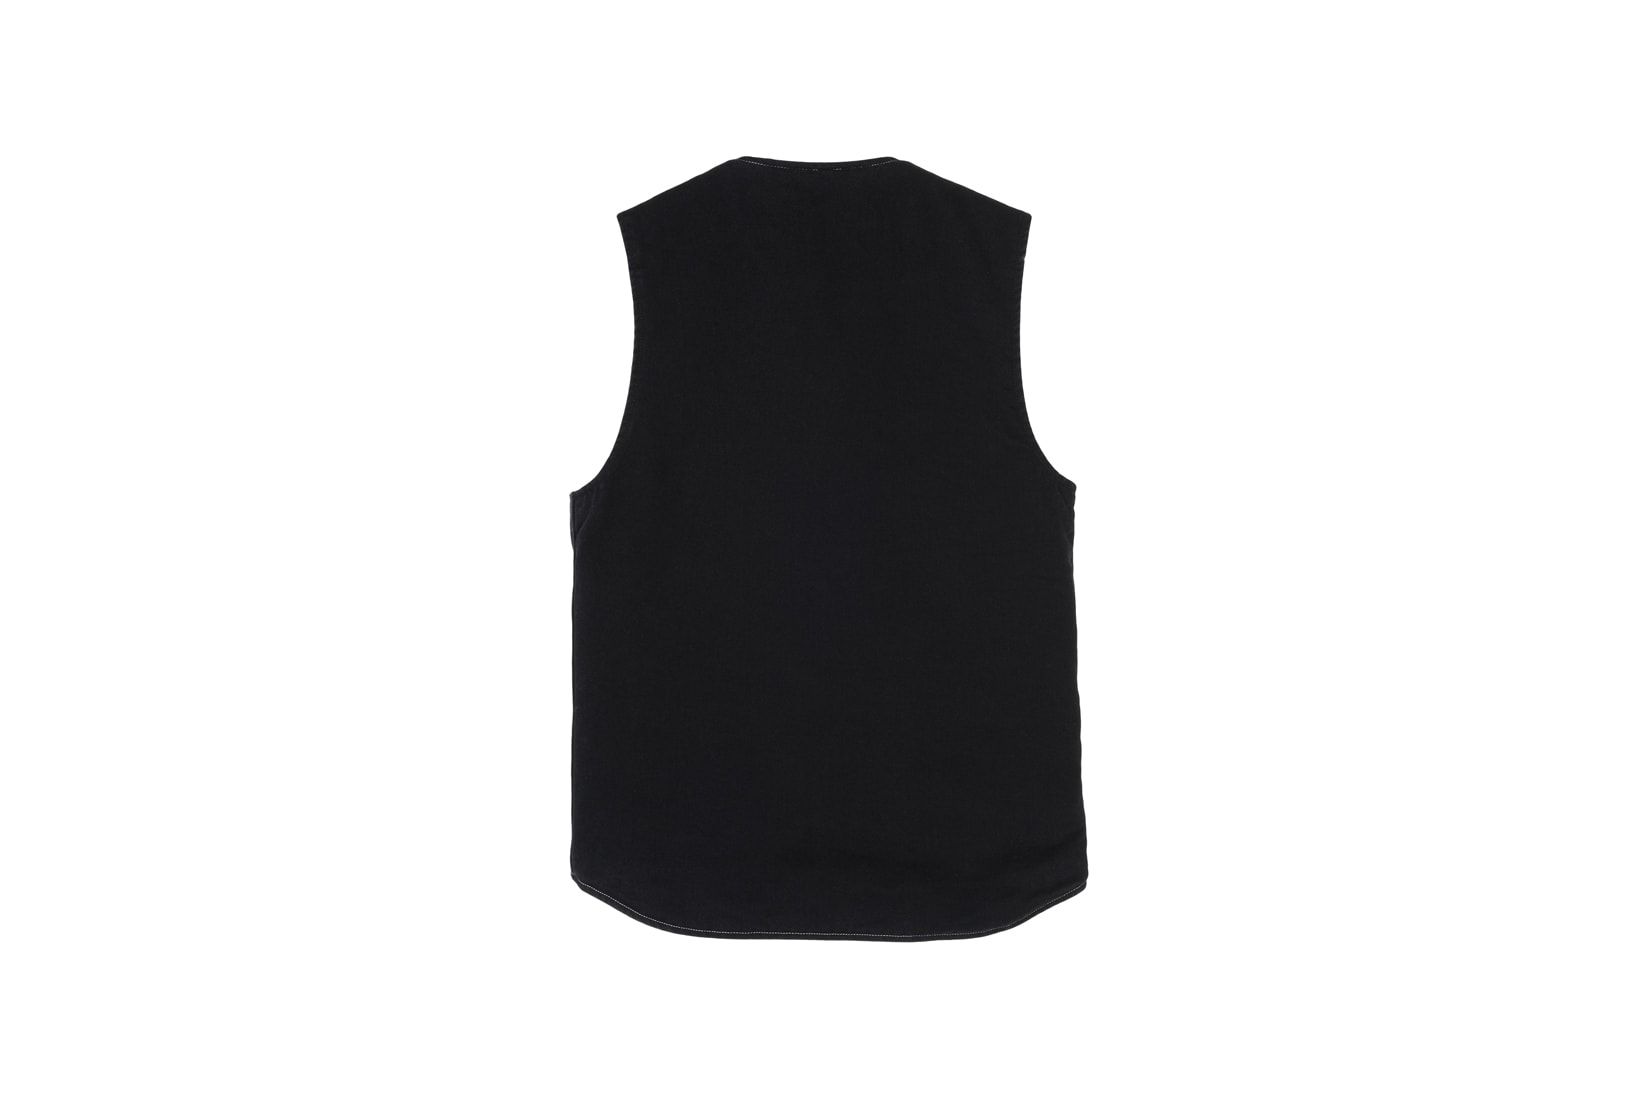 Stussy x Carharrt WIP x Dover Street Market Collaboration Vest Black